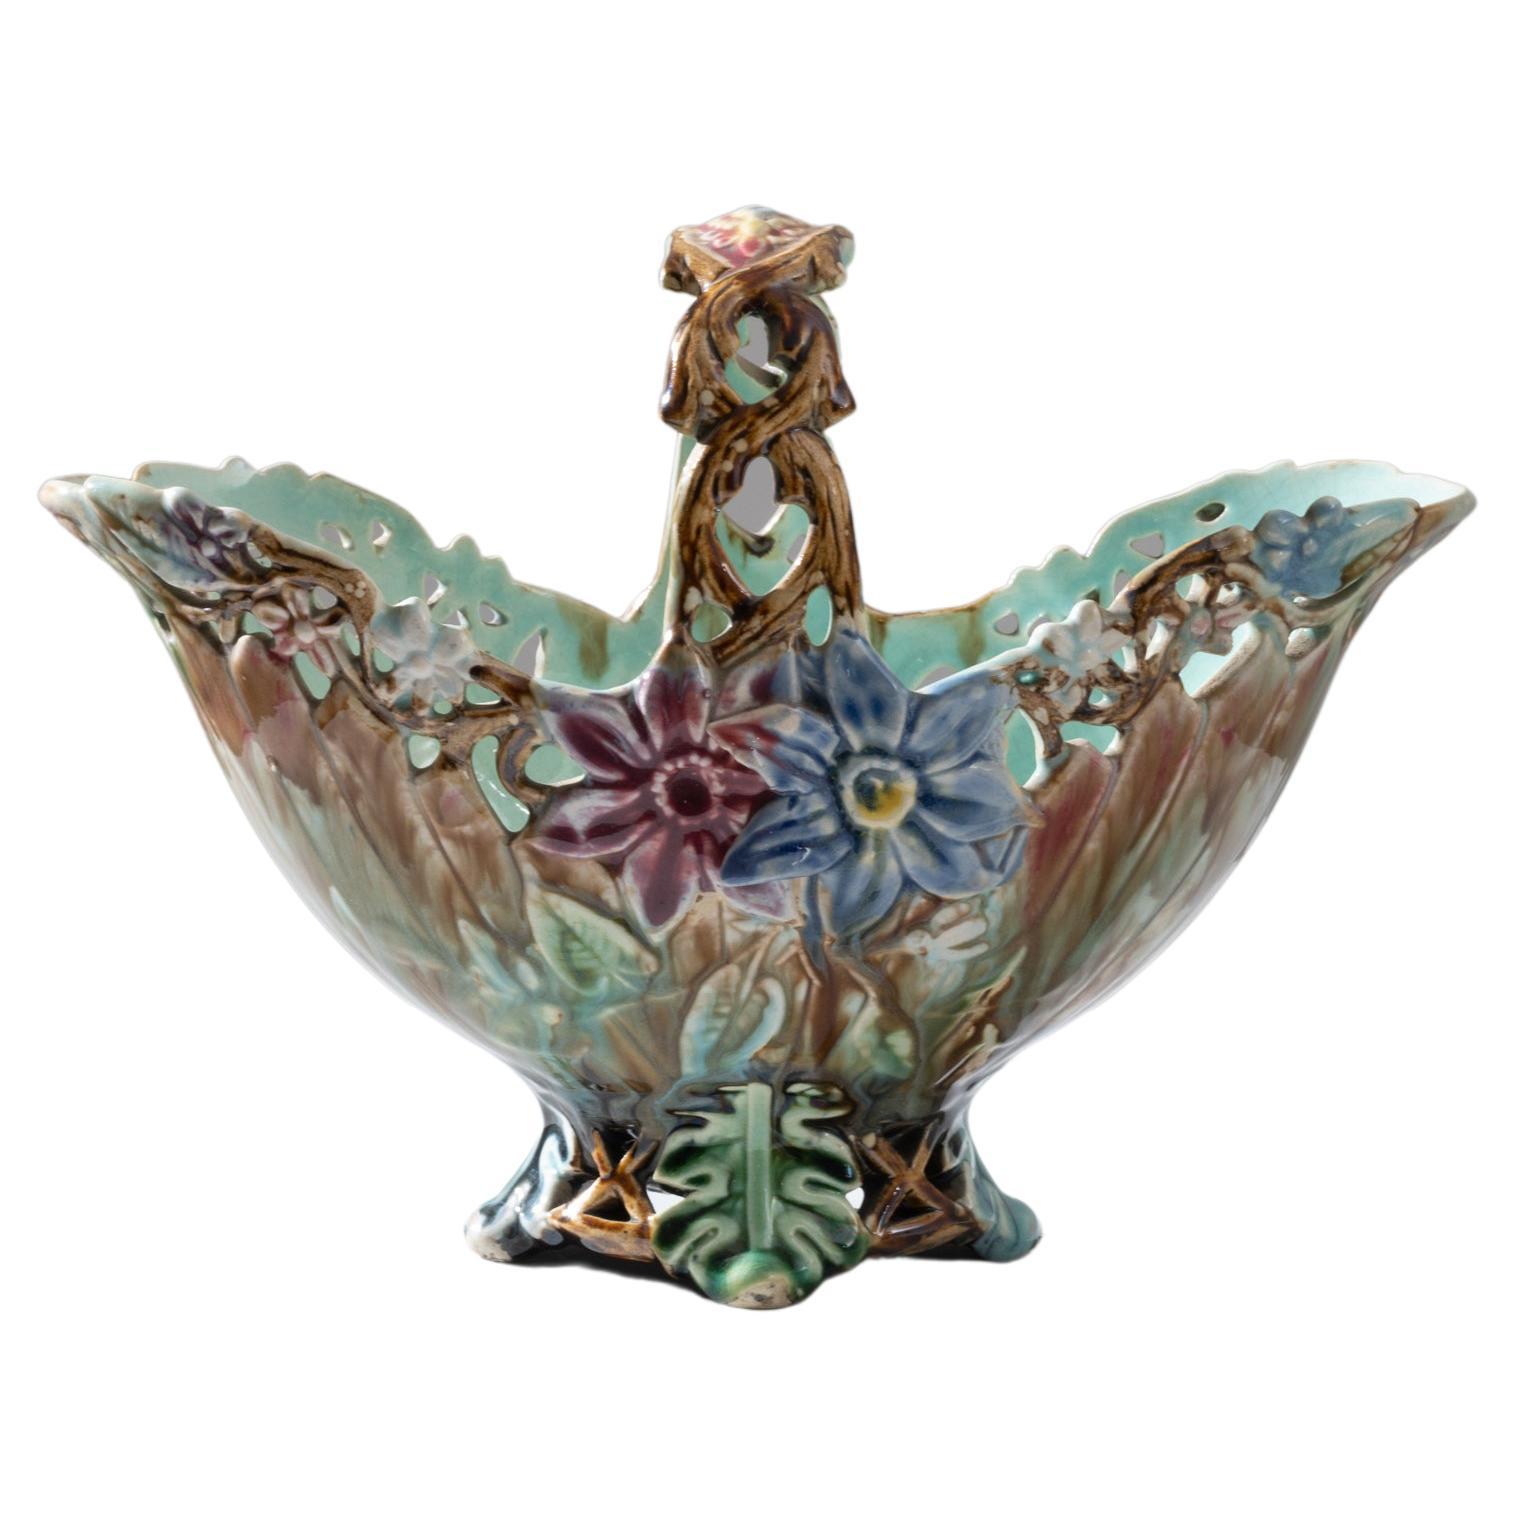 1920s Belgian Decorative Ceramic Bowl For Sale